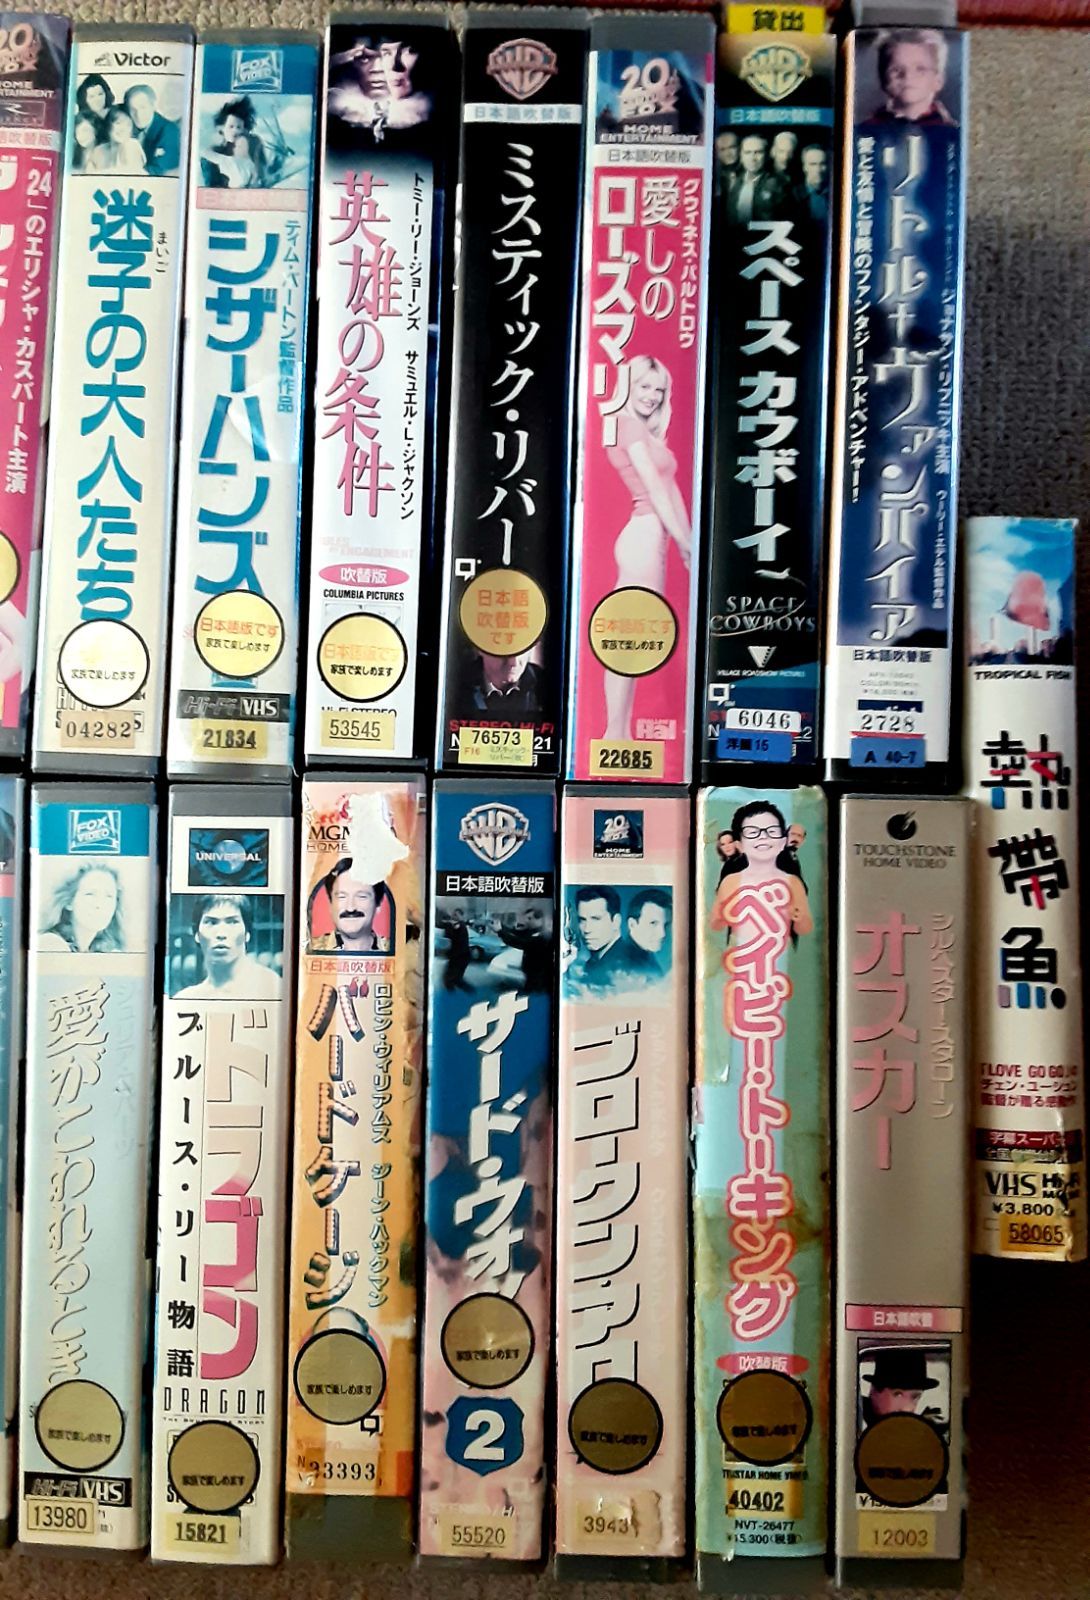 VHS ビデオ 洋画 ビデオテープ 27本セット 映画 まとめ売り 希少 レア